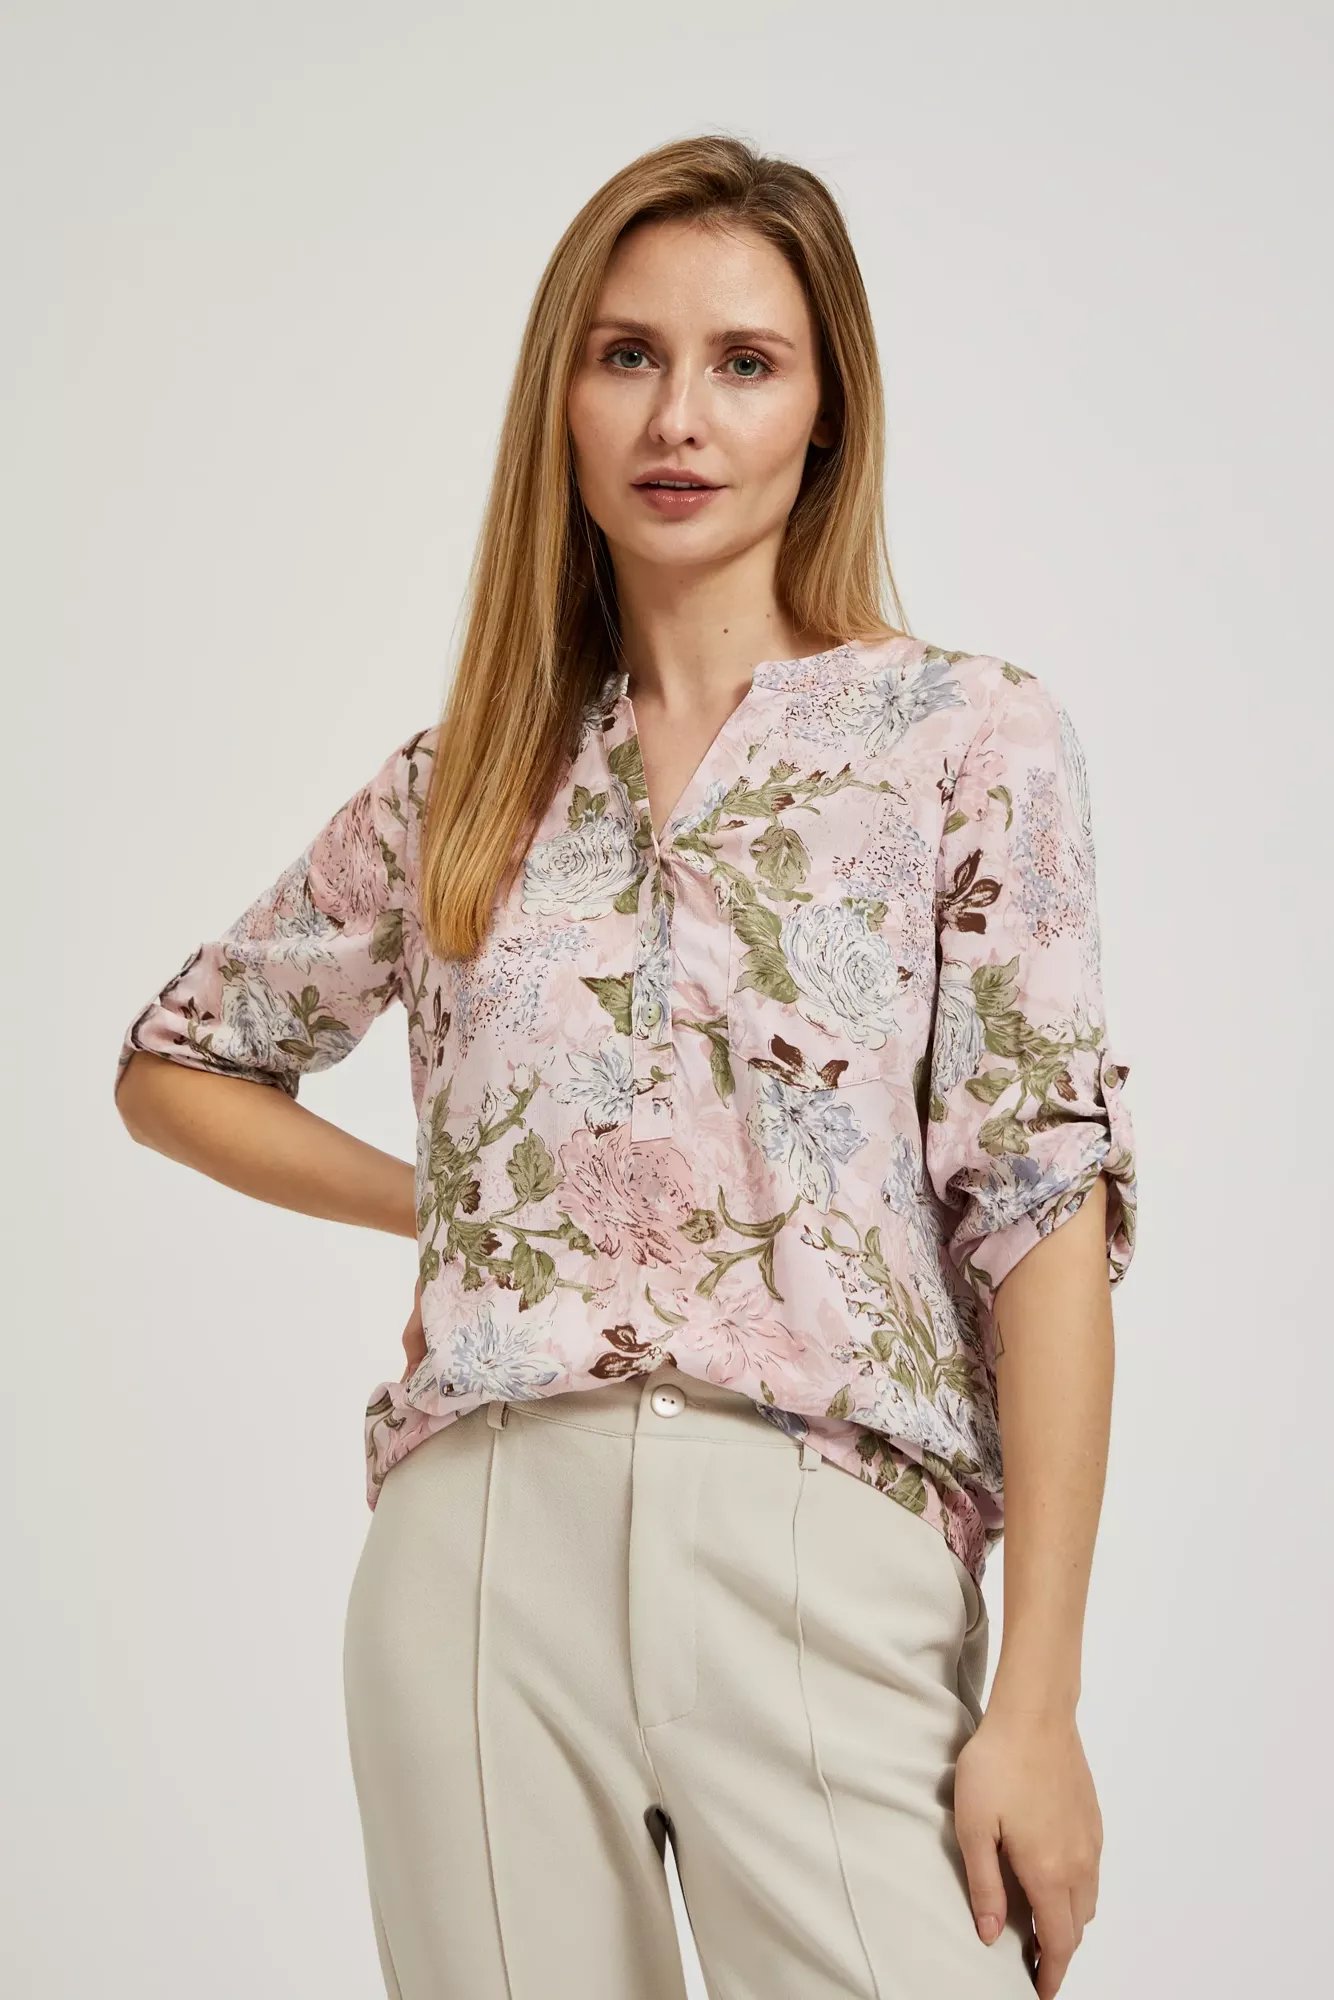 Women's blouse MOODO - light pink, floral pattern